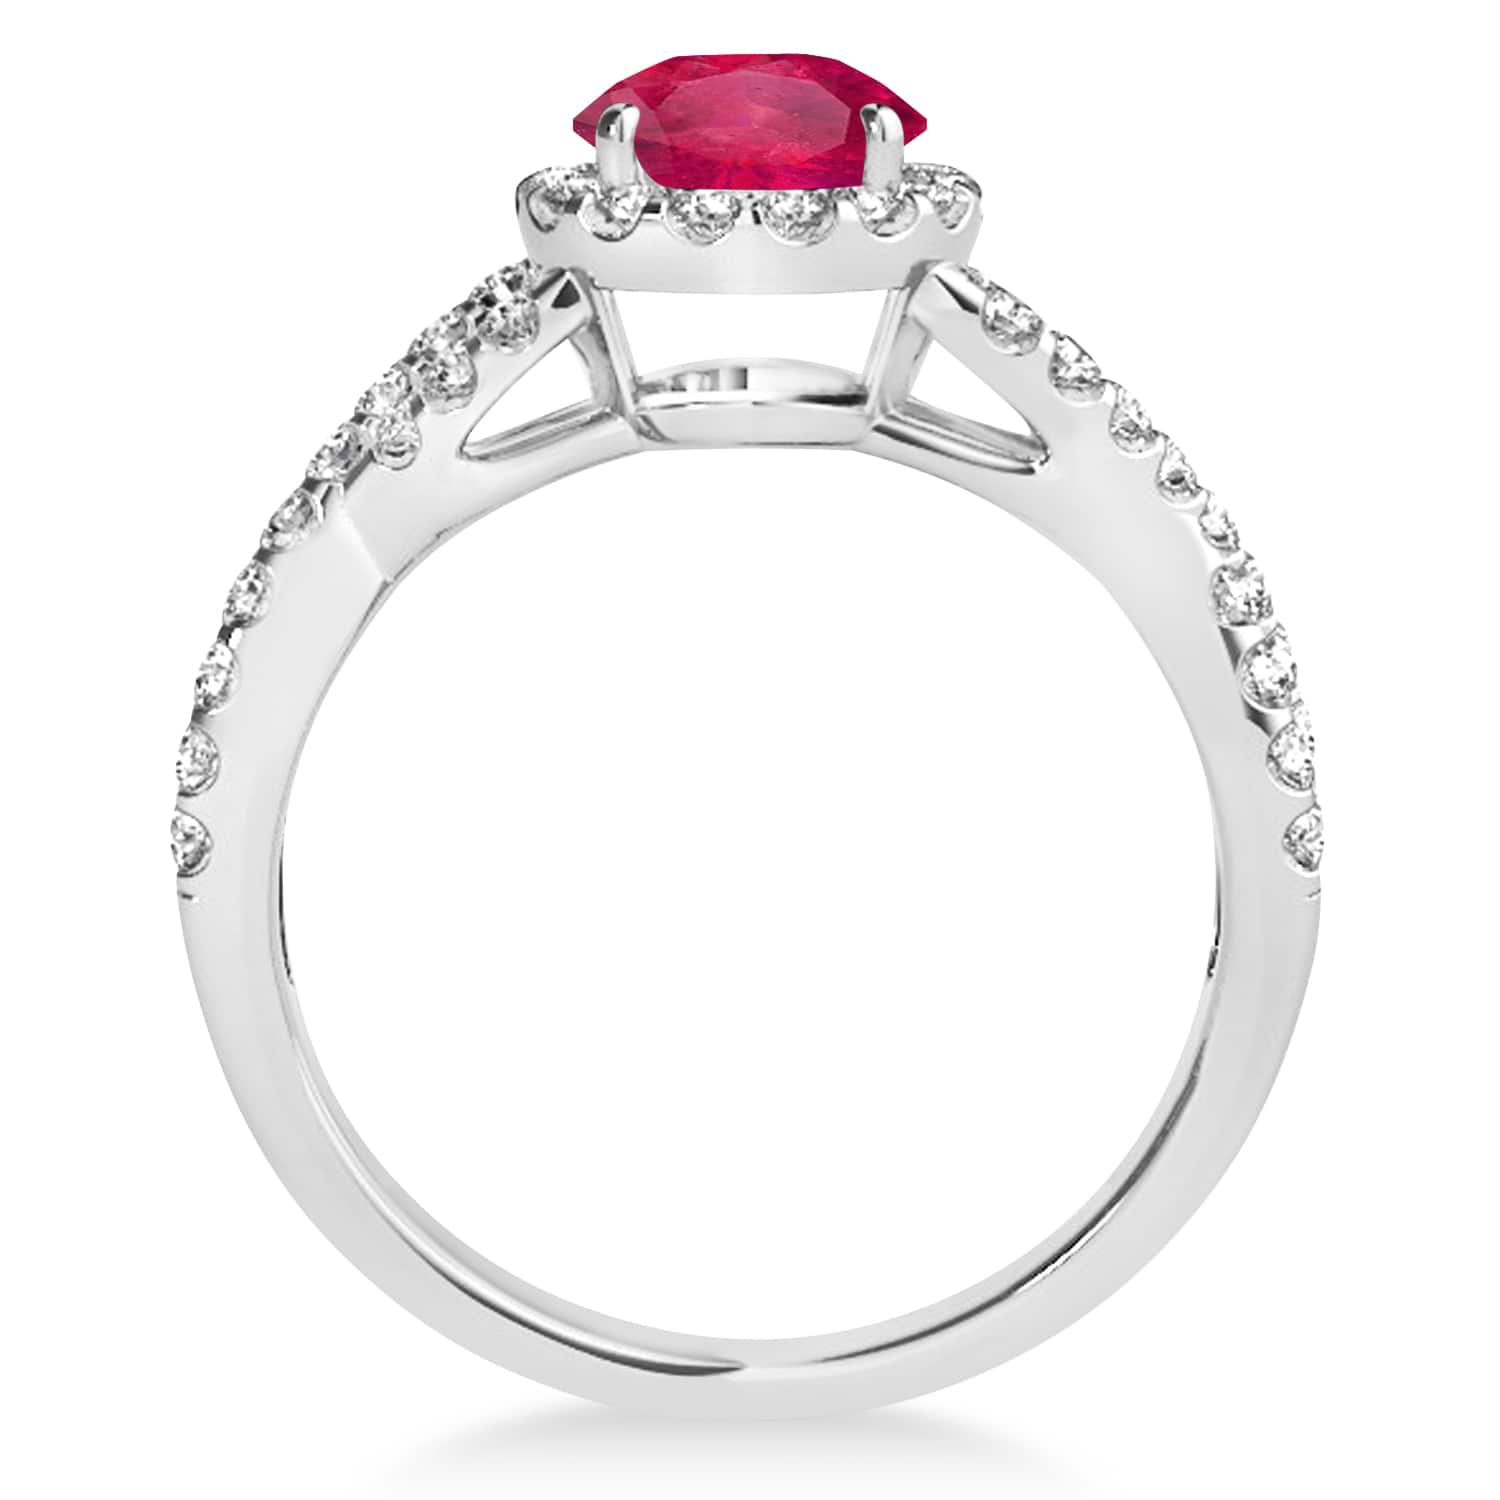 Ruby & Diamond Twisted Engagement Ring Palladium 1.55ct